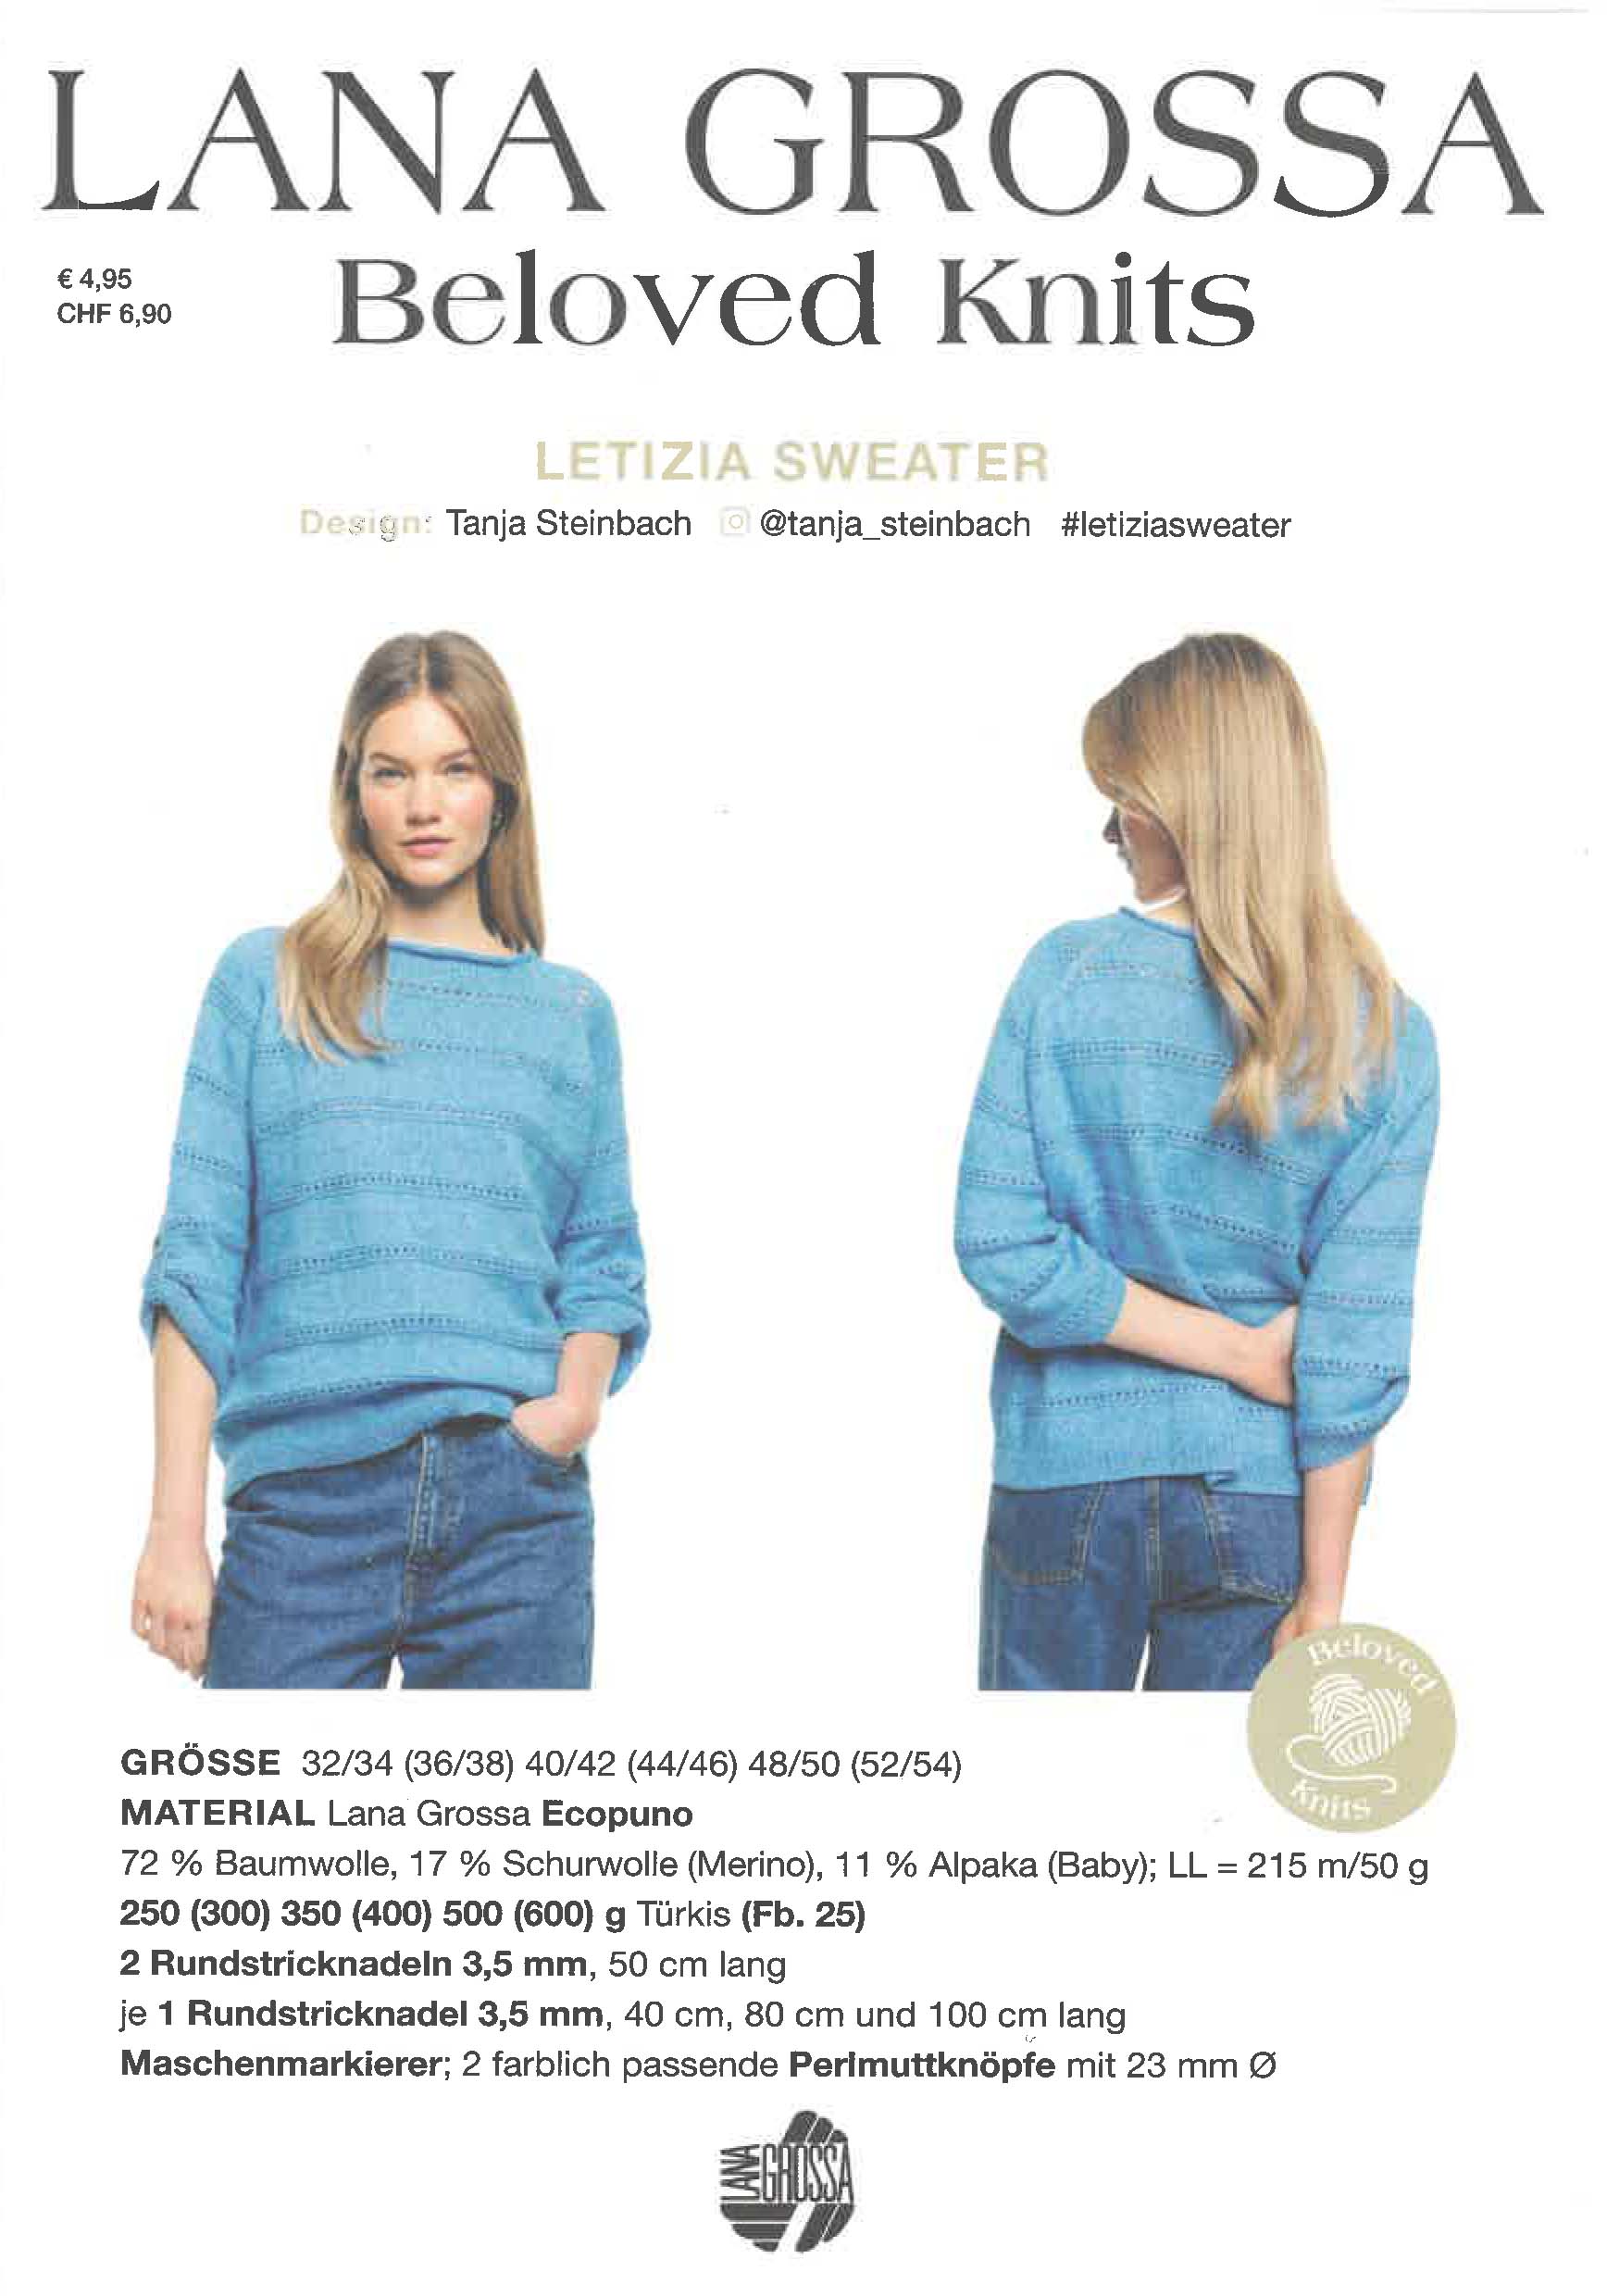 Letizia Sweater